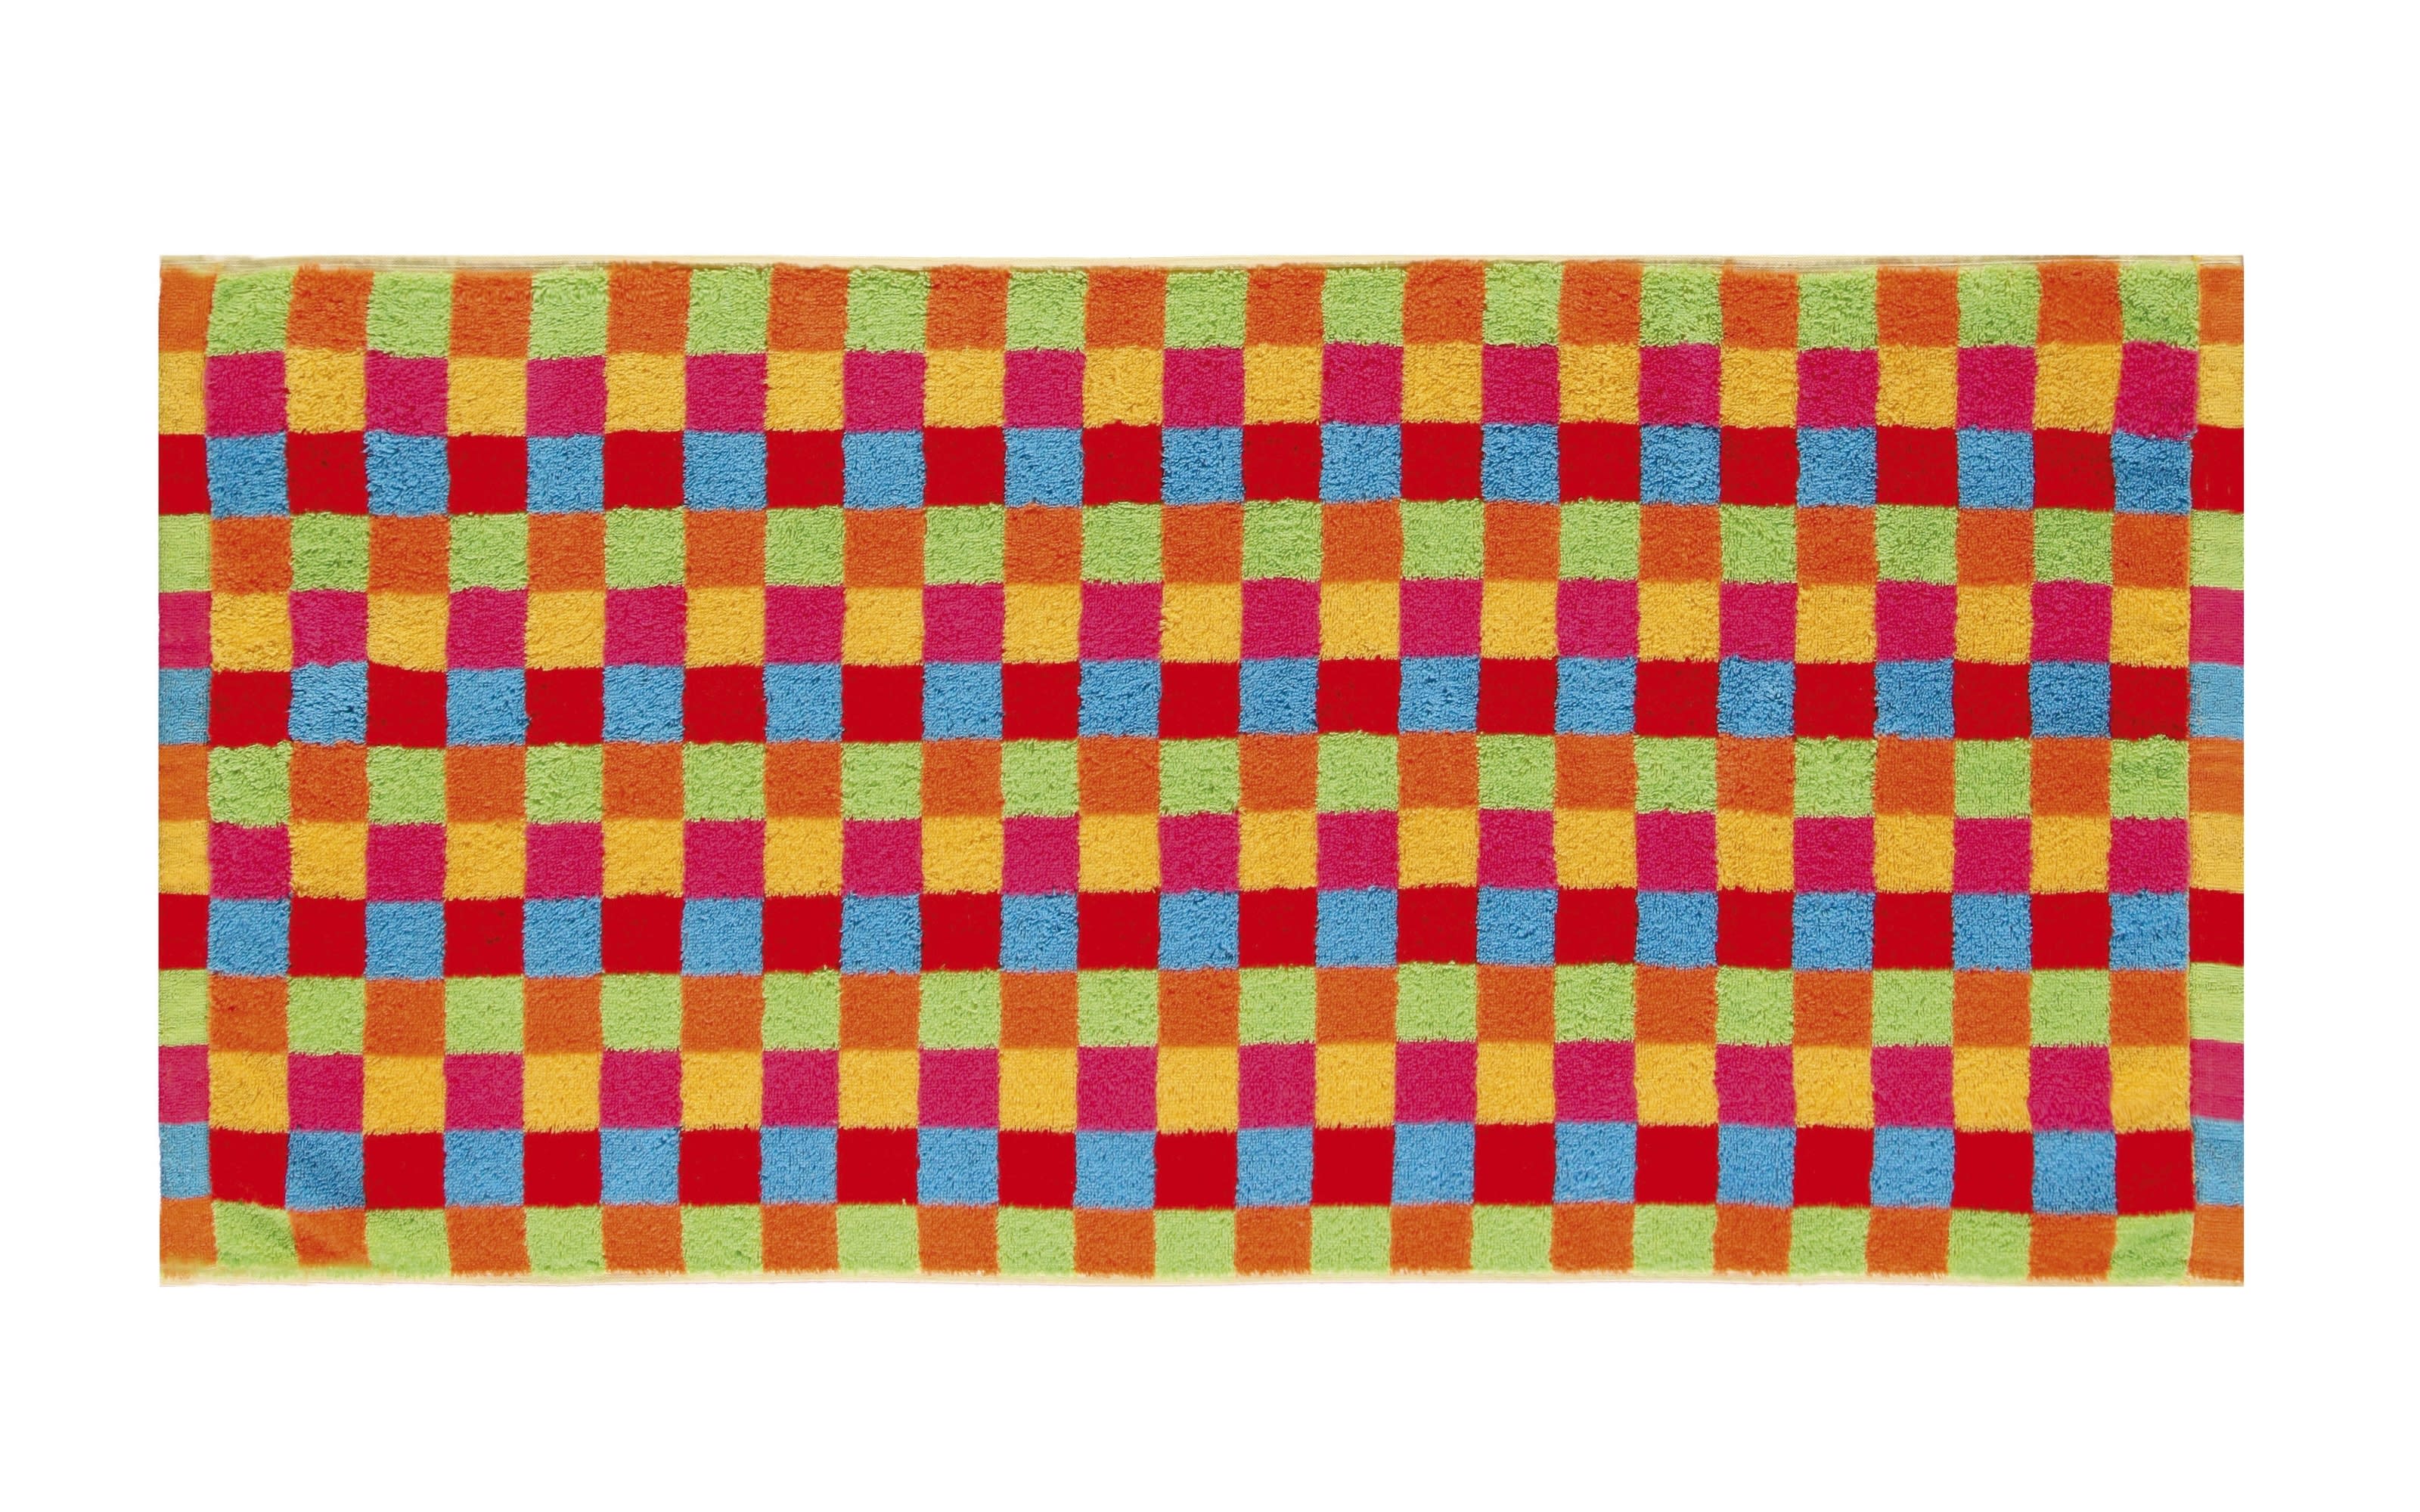 Handtuch Lifestyle Karo, multicolor, 50 x 100 cm